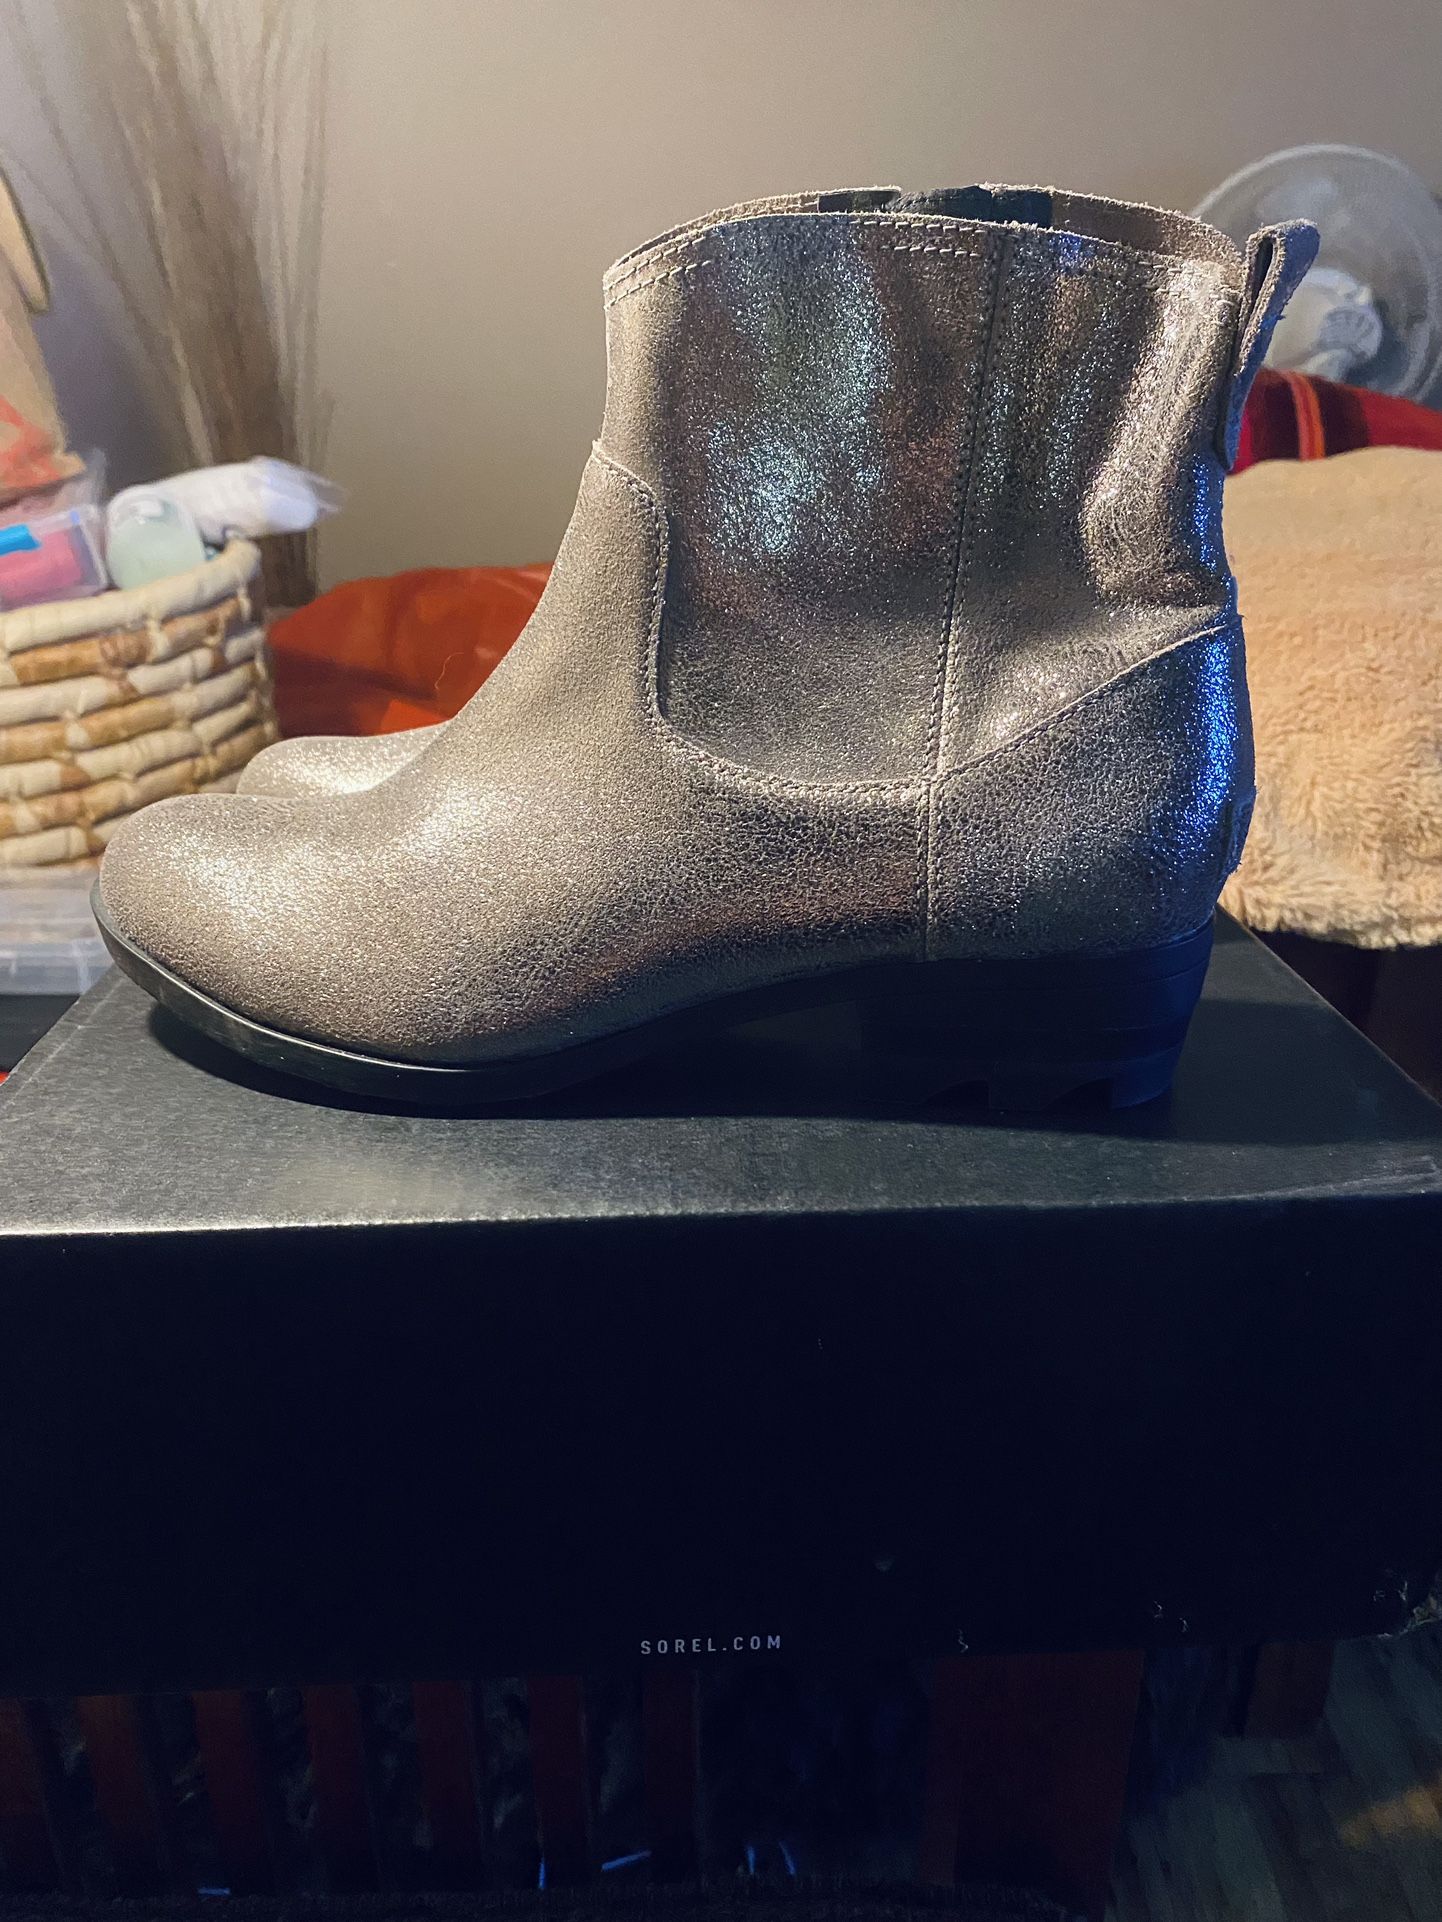 Sorel Boots - Size 10 